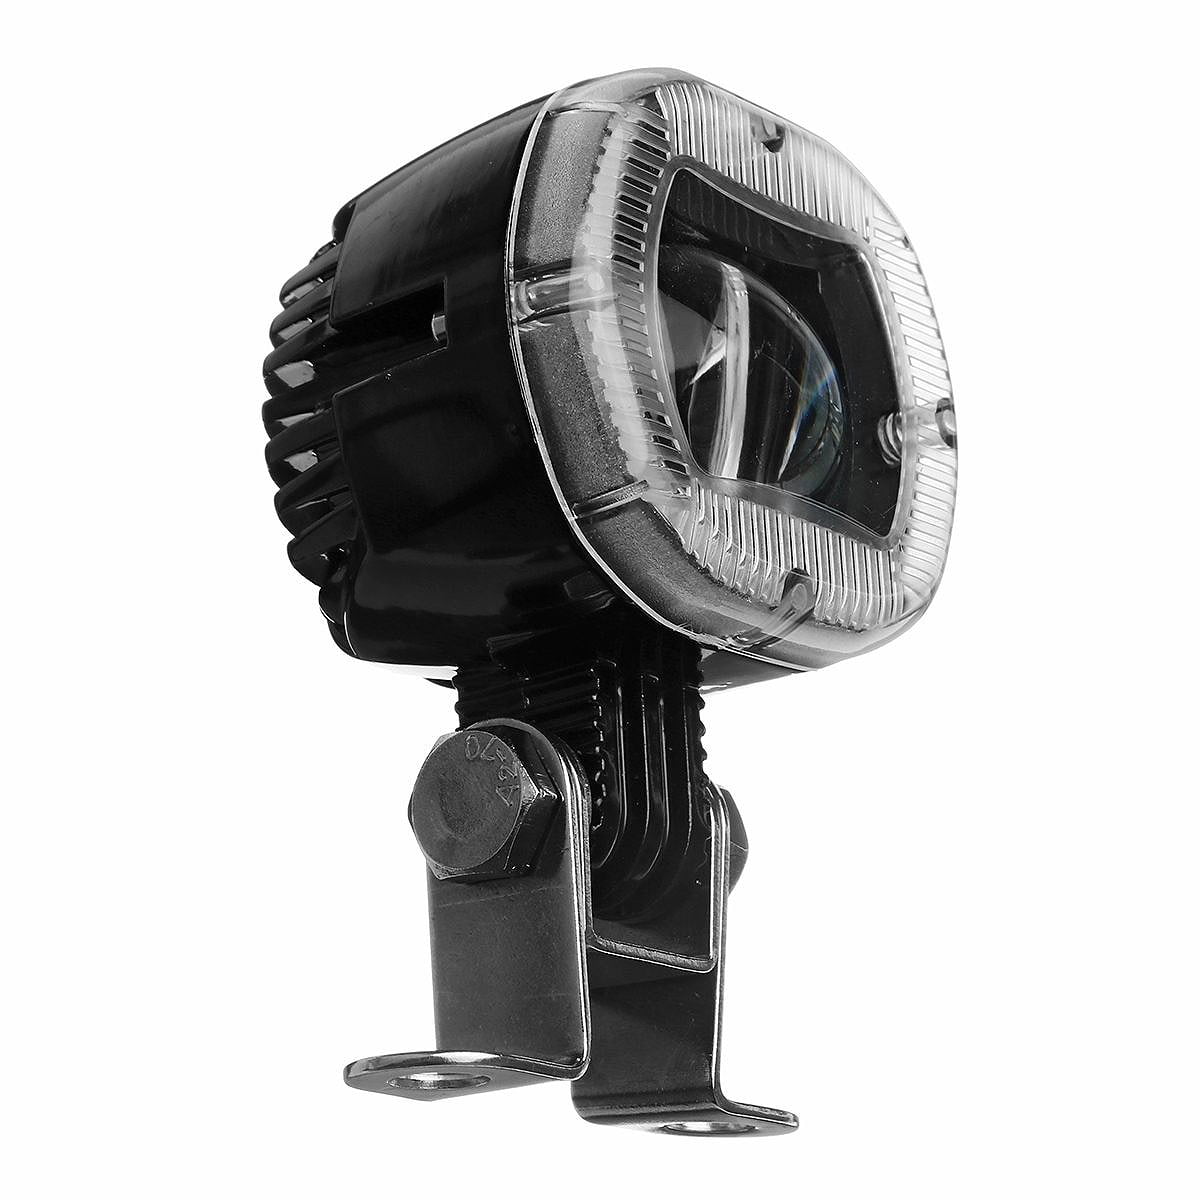 2x 20W 3D convex lens LED Spot Forklift Safety Warning Light Working Spot Lamp 